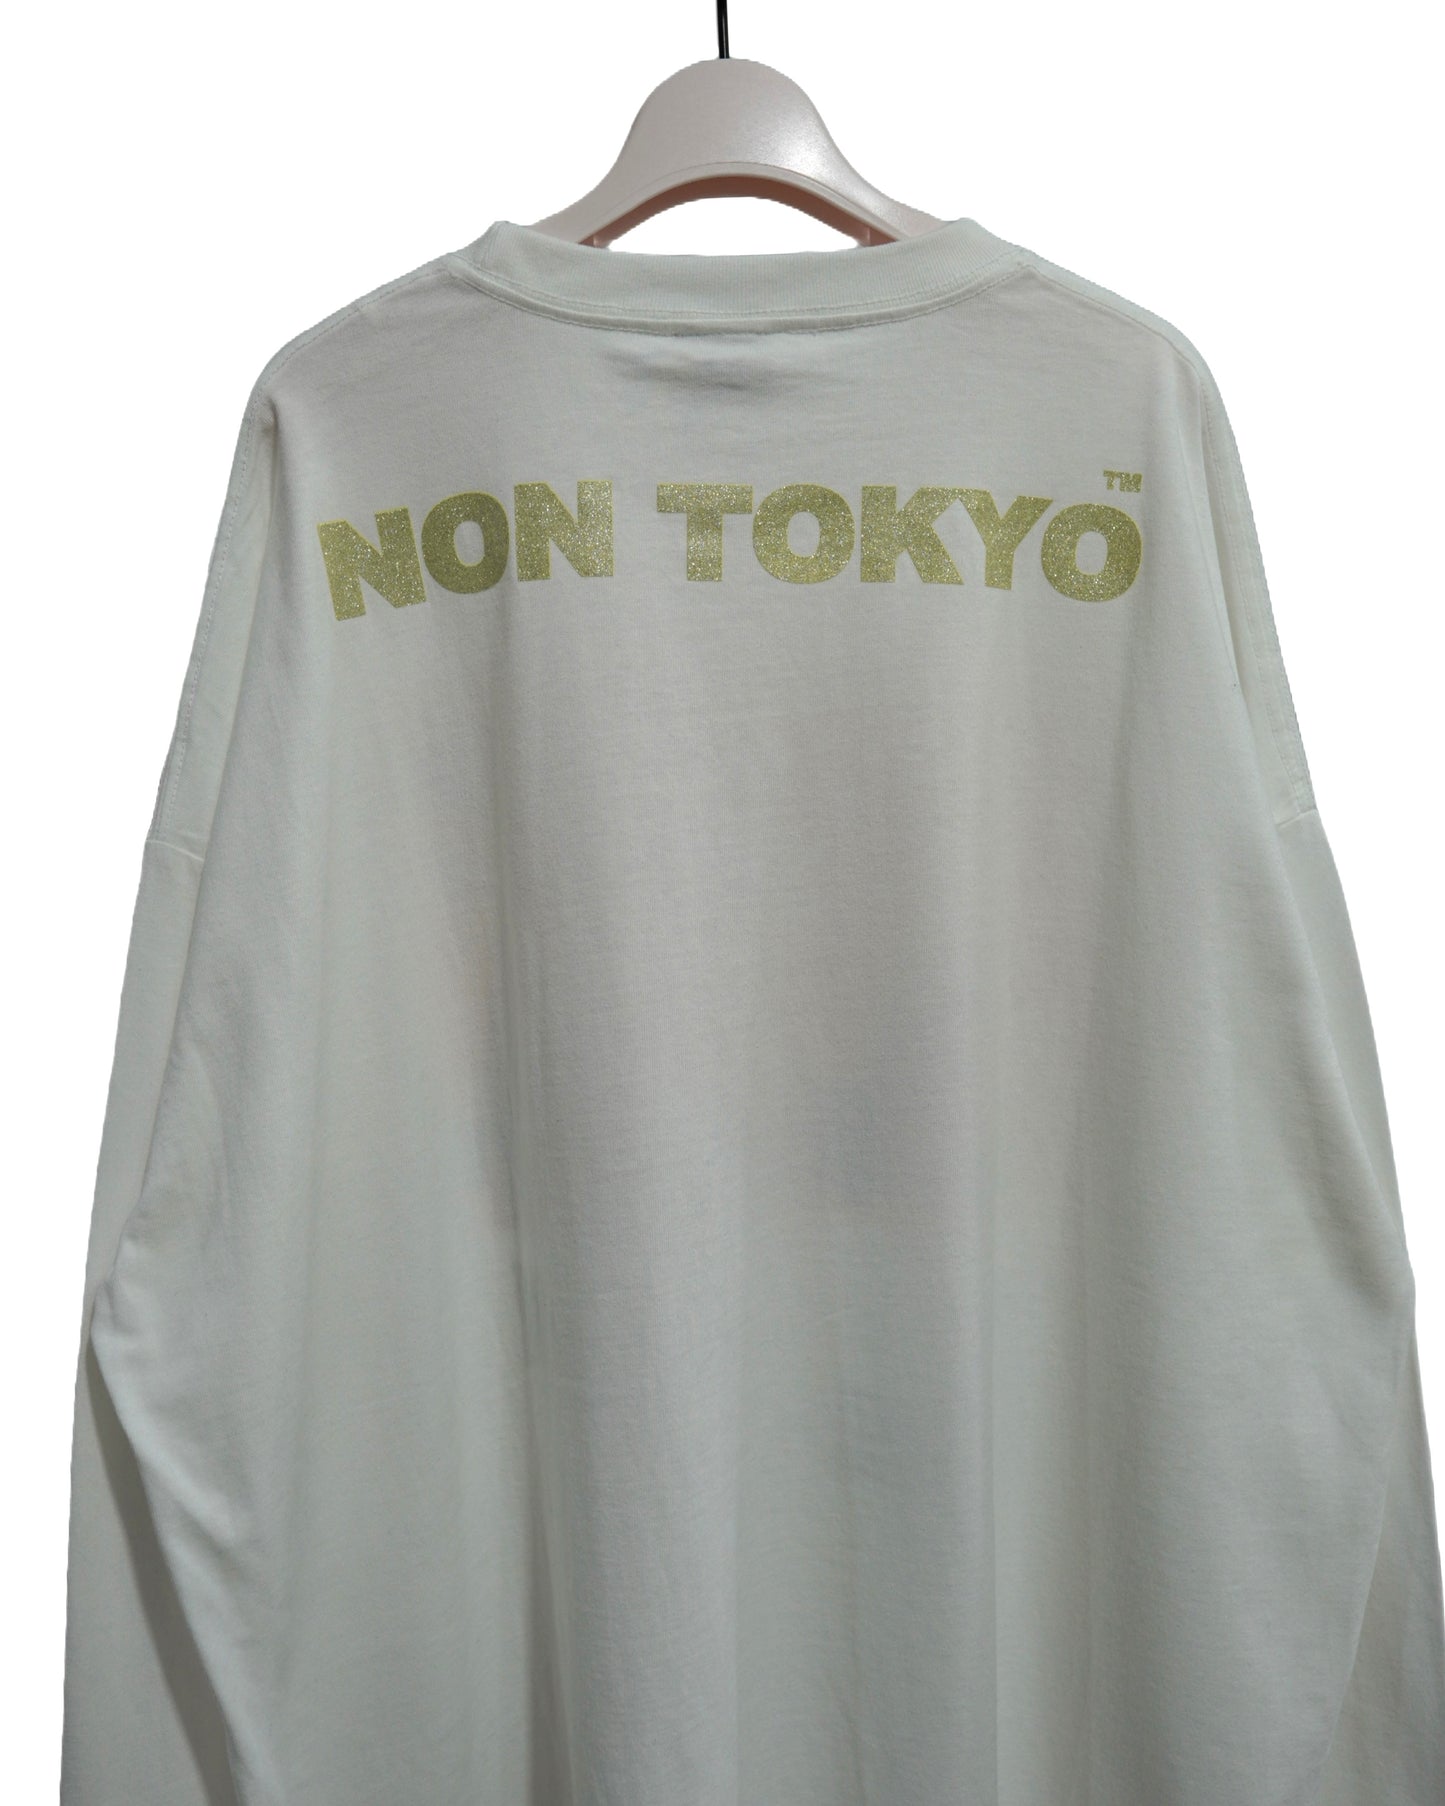 NON TOKYO / PRINT L/S T-SHIRT(HOUSE / WHITE) / 〈ノントーキョー〉プリントロングスリーブTシャツ (家 / ホワイト)